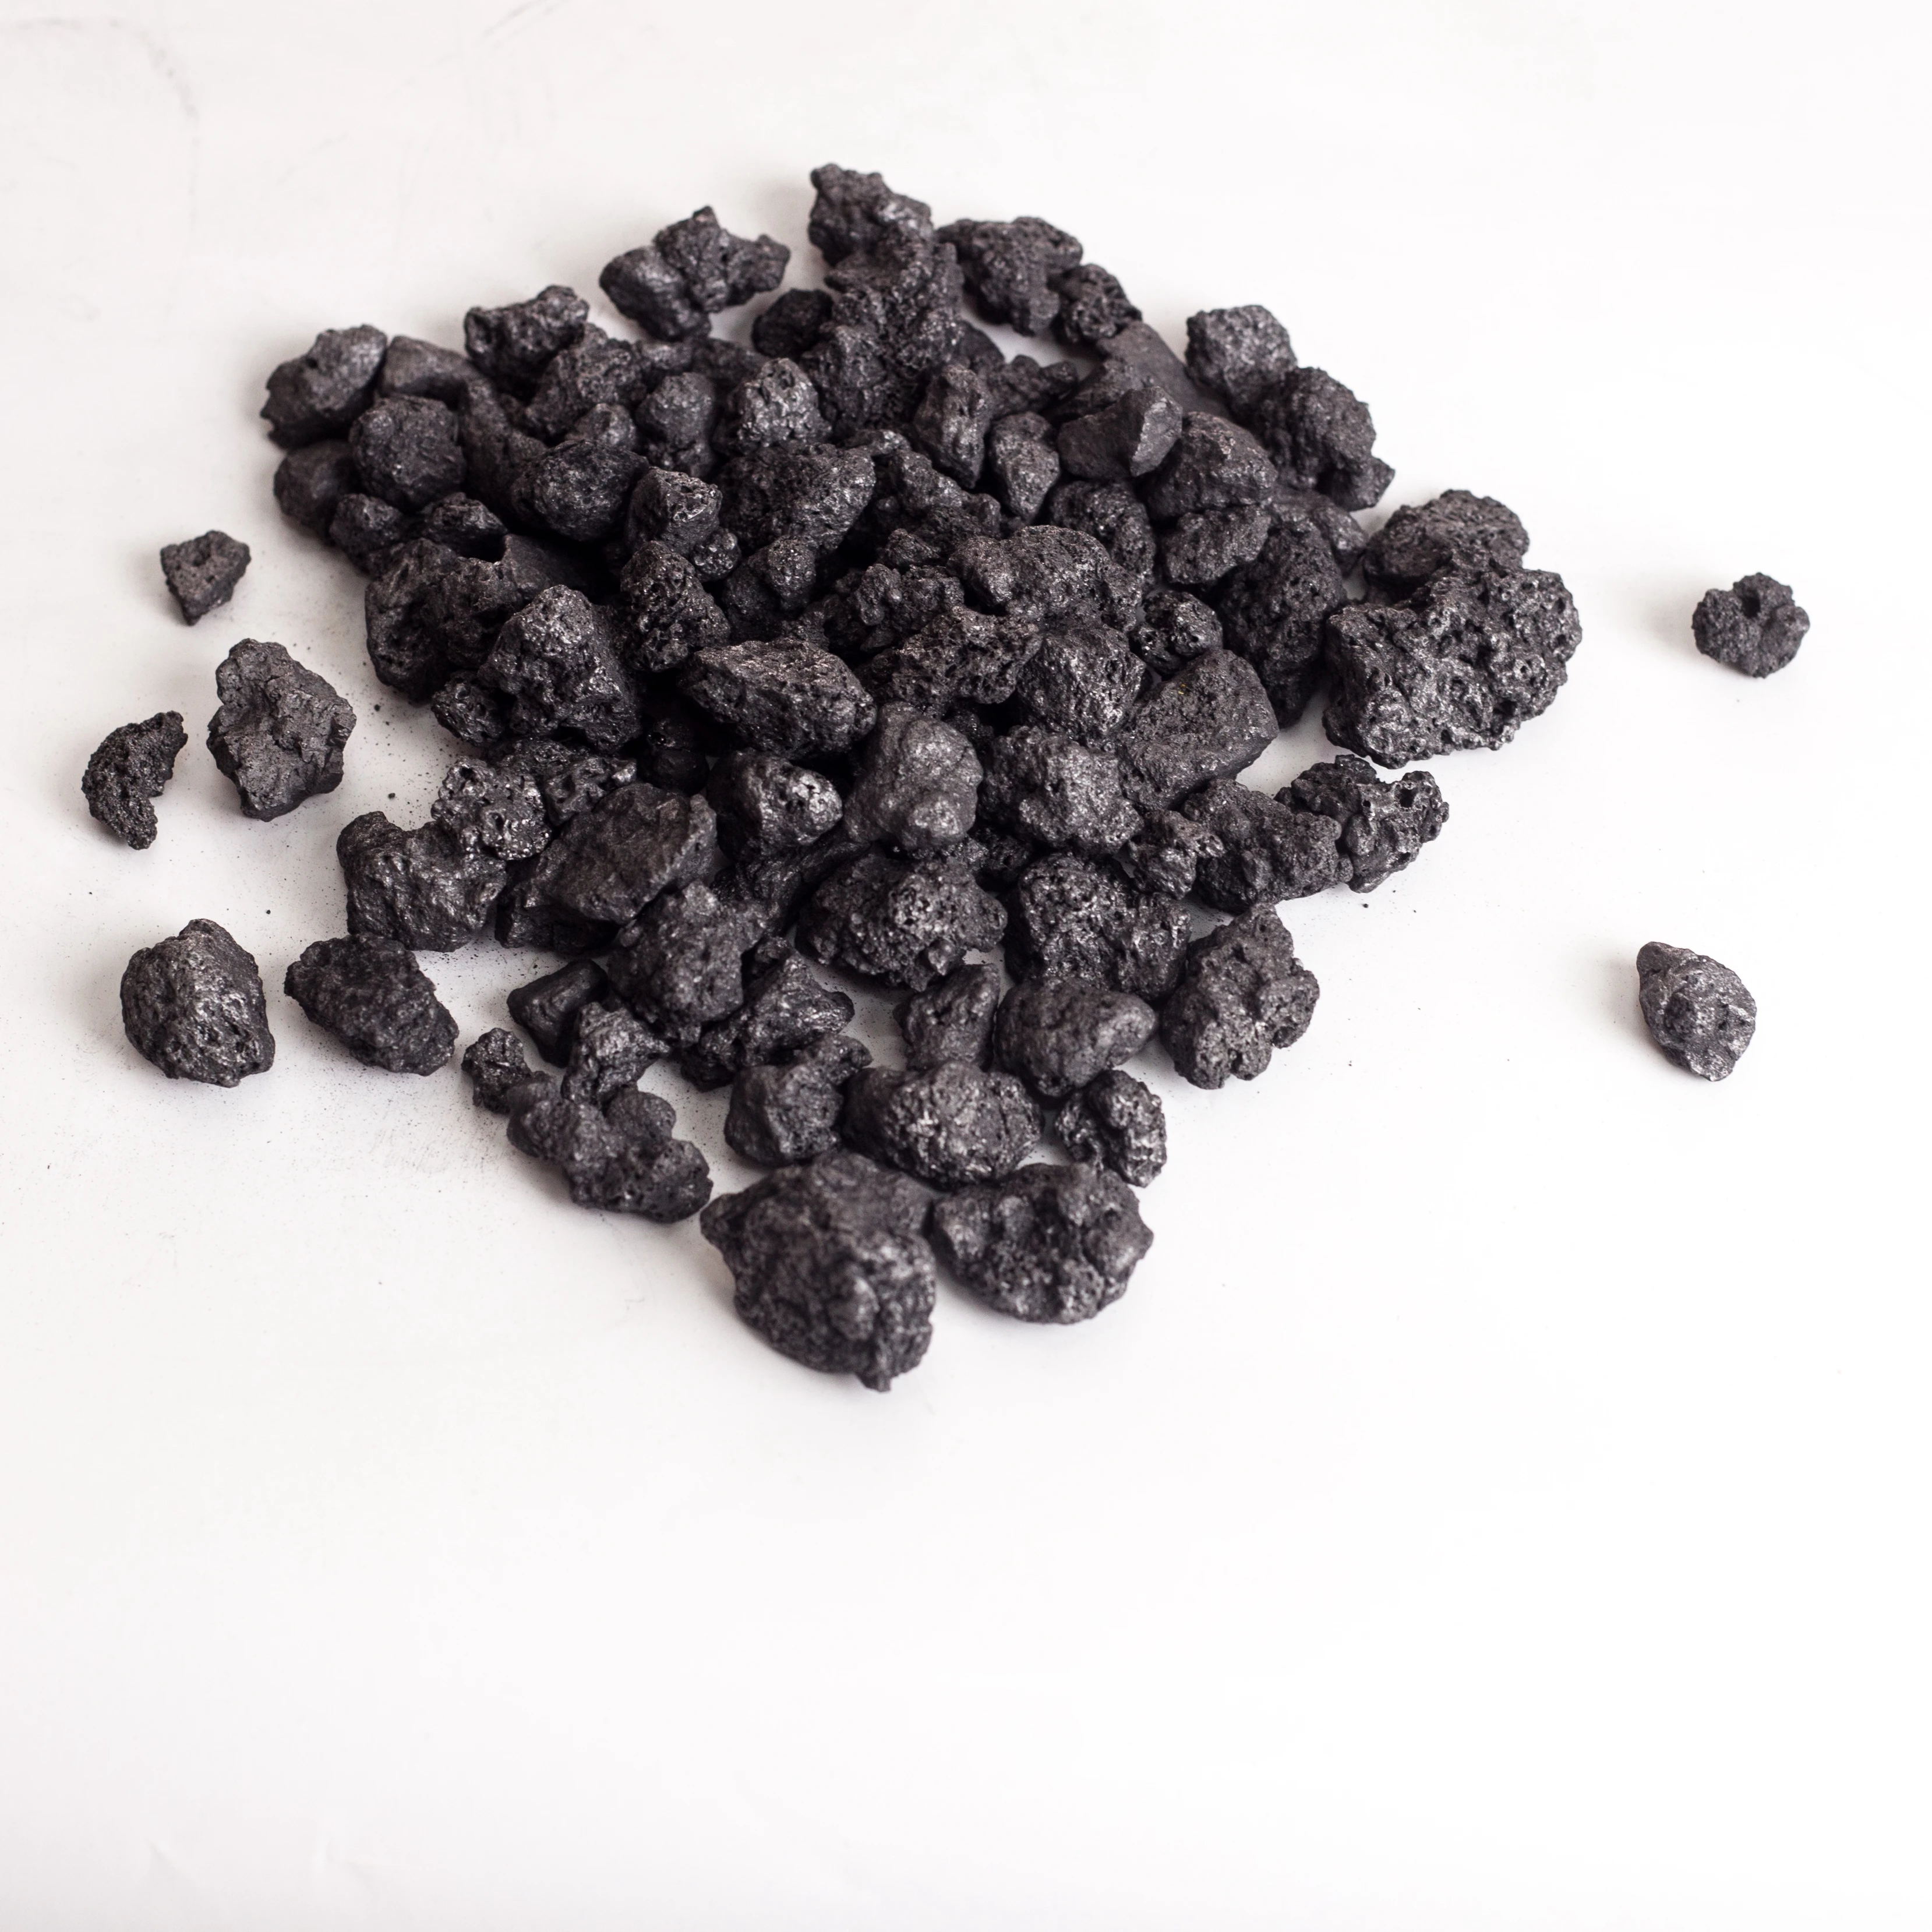 low sulphur 1-5mm graphite petroleum coke granules powder price